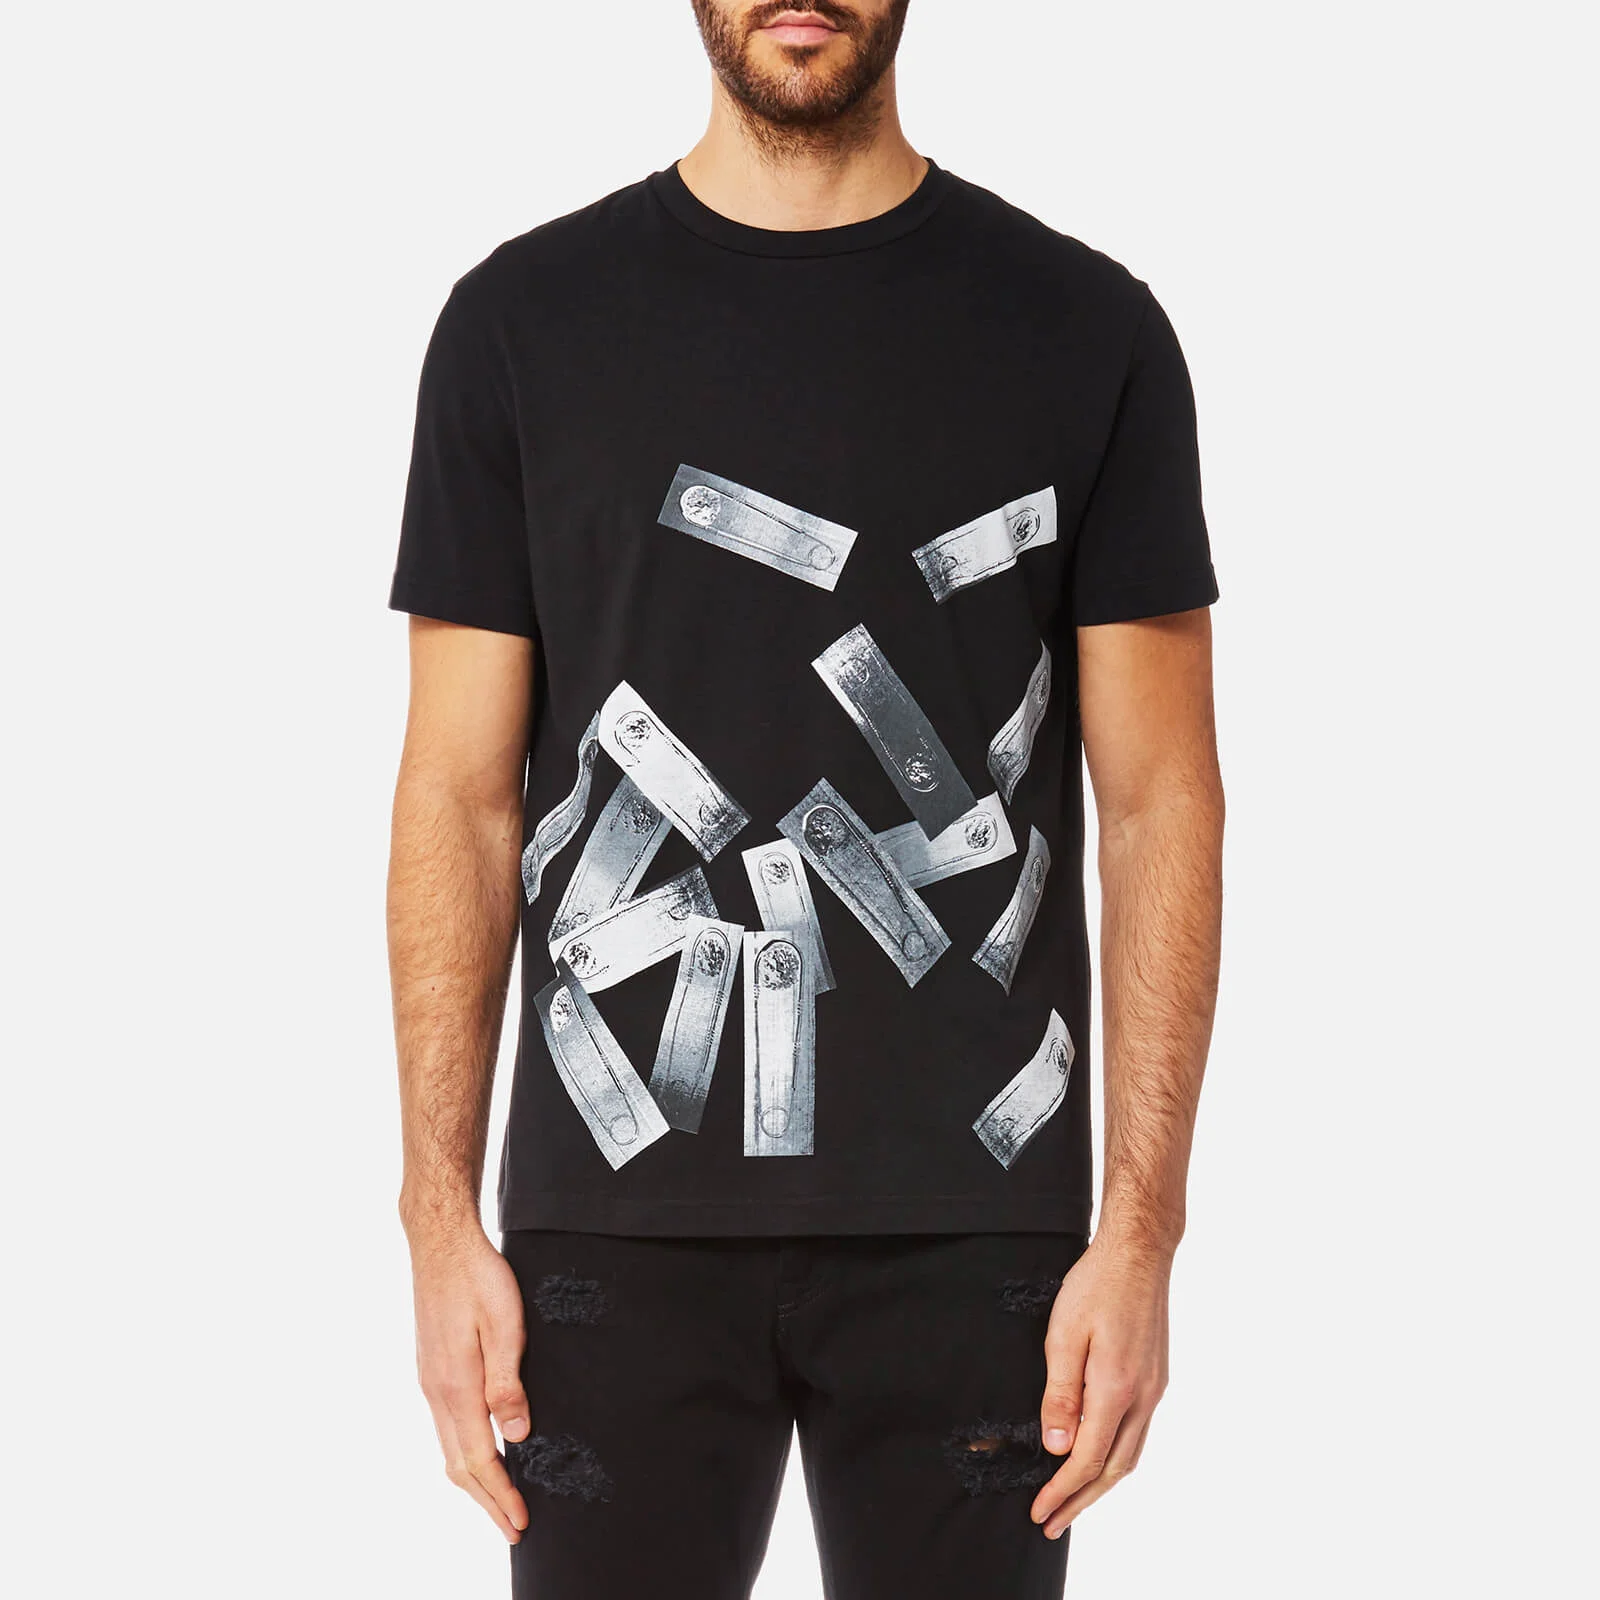 Versus Versace Men's Pin Print T-Shirt - Black/Stampa Image 1